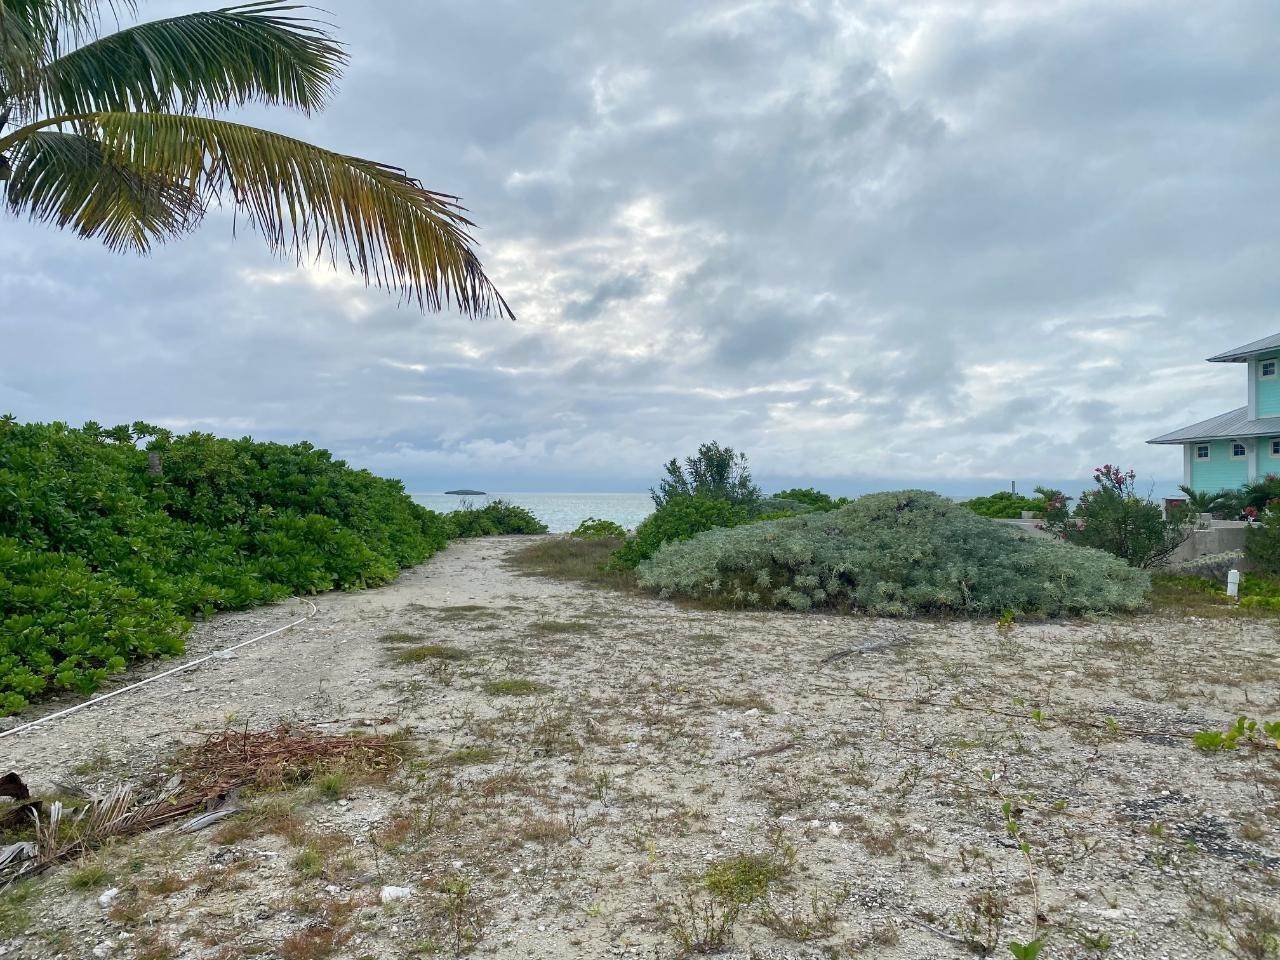 13. Lots / Acreage for Sale at Chub Cay, Berry Islands Bahamas